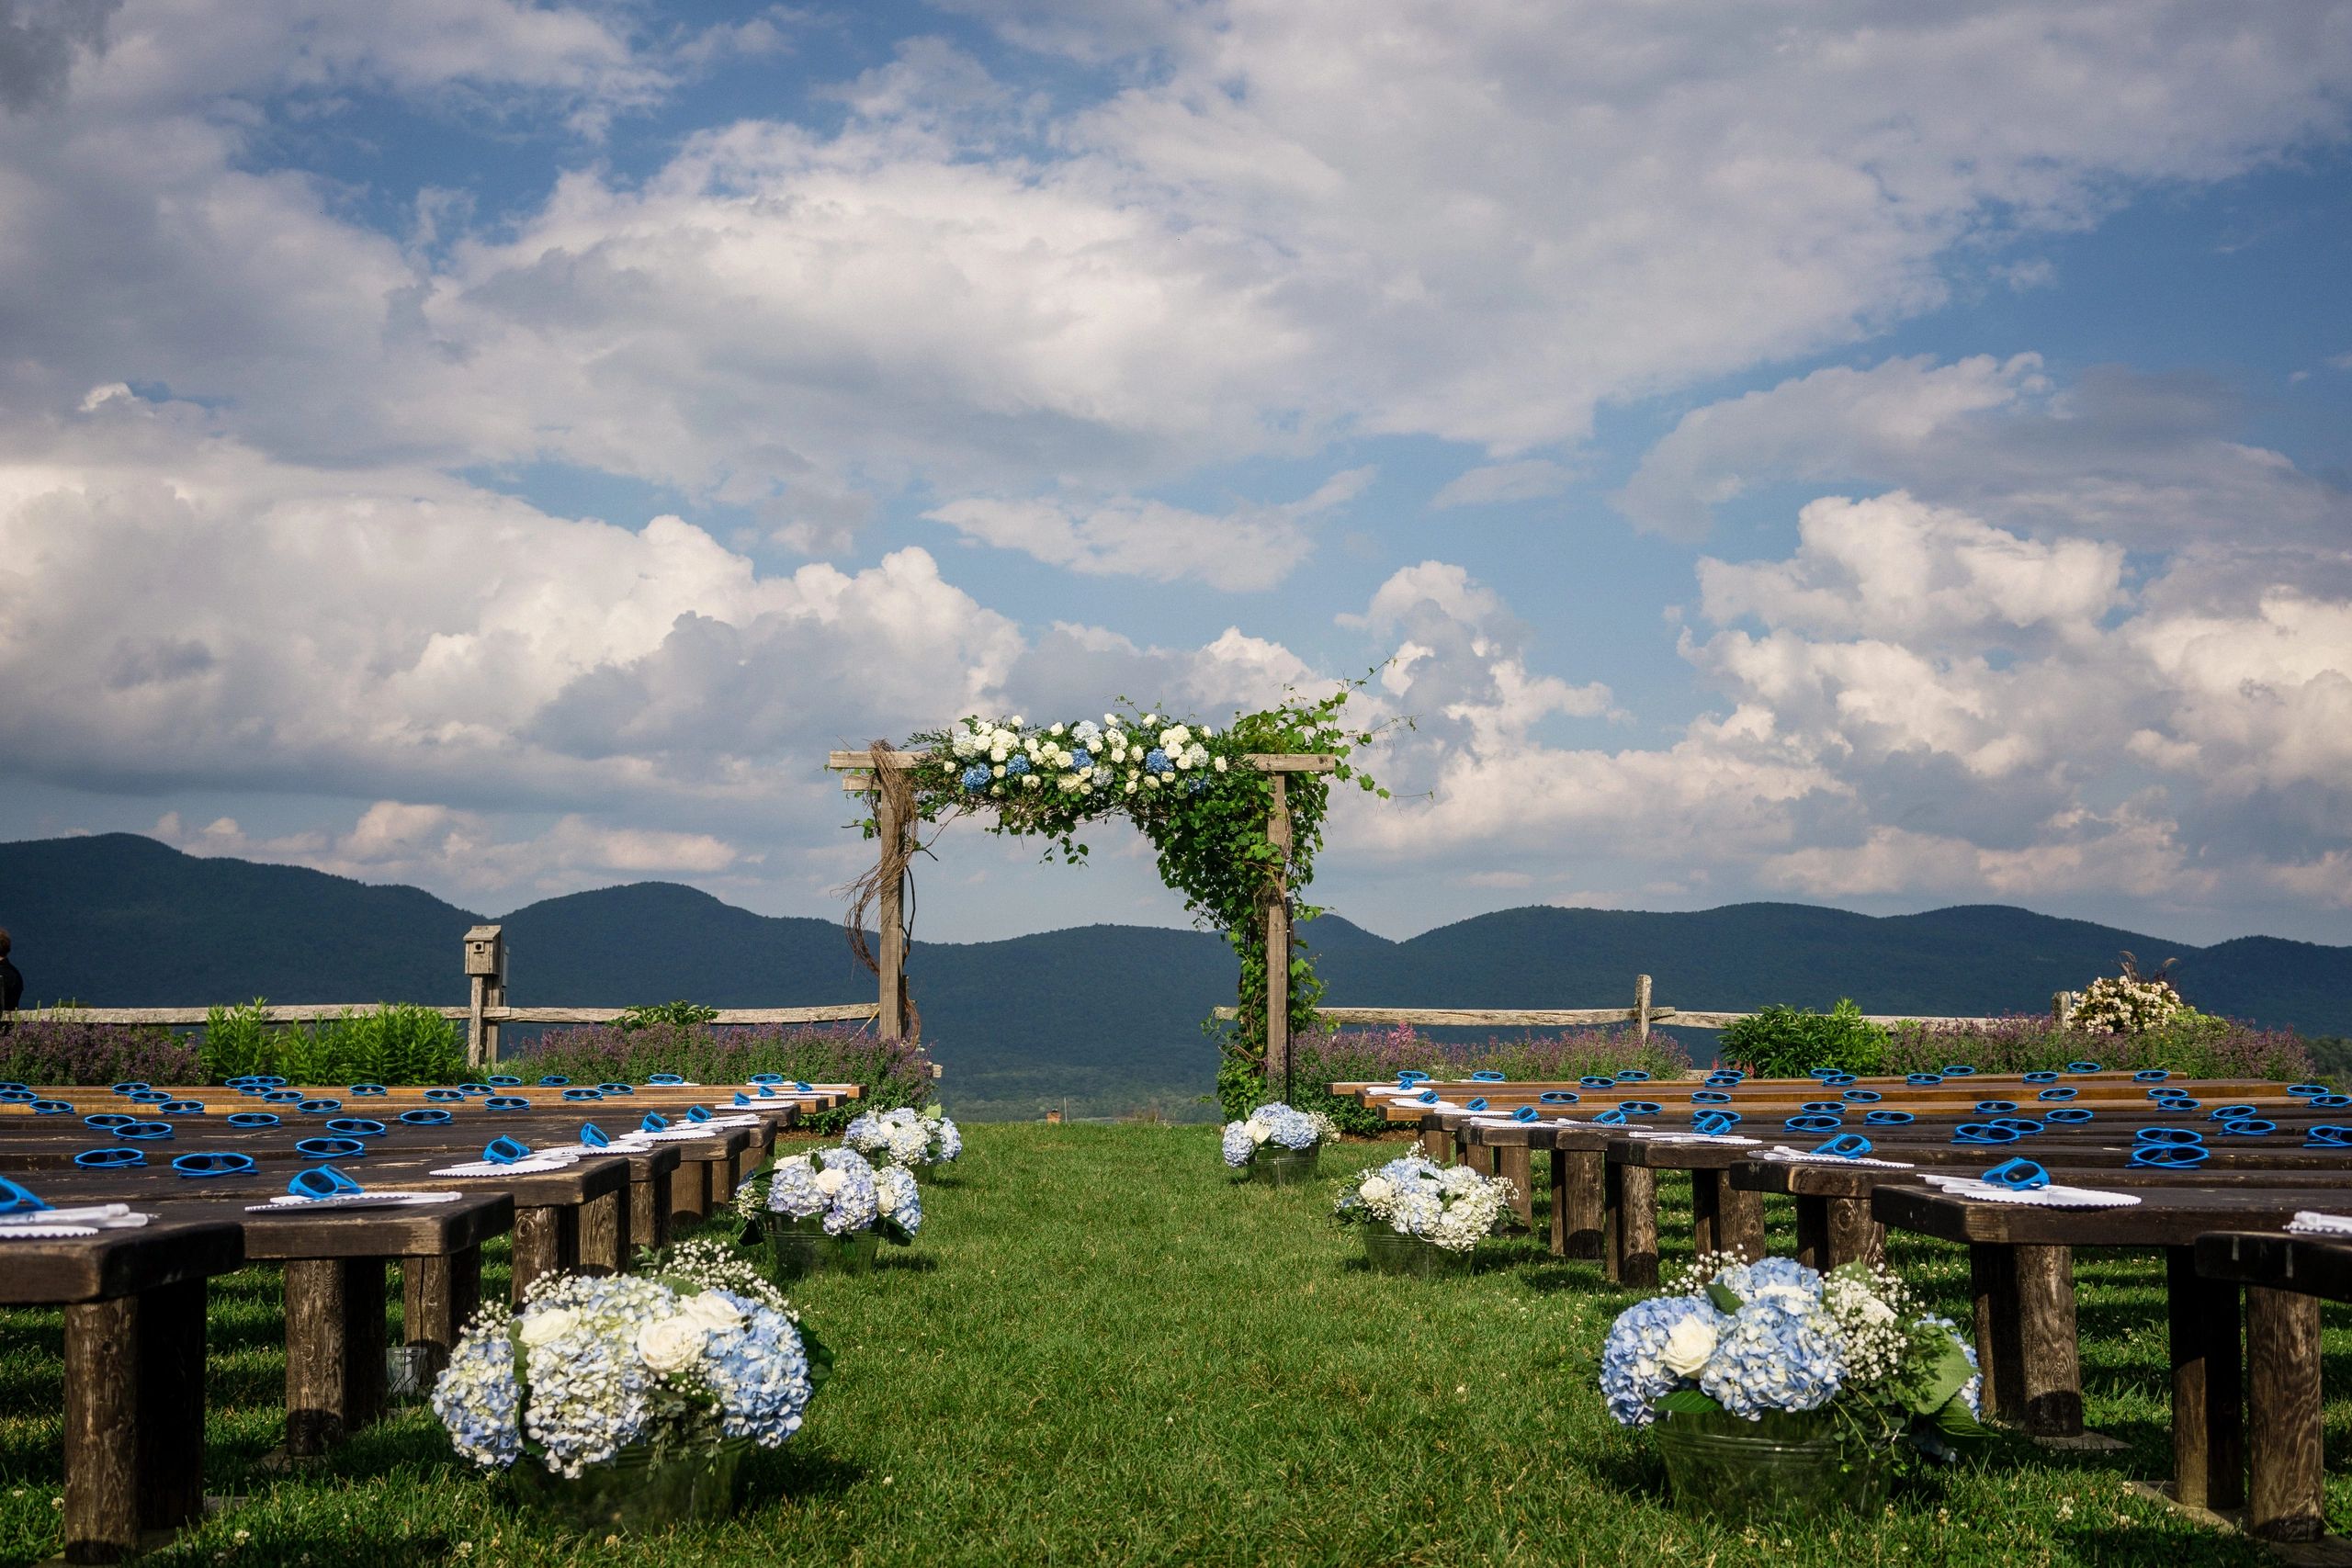 Wedding ceremony at Mountain Top Inn, Vermont.
Photo credit: Michael Tallman Photography